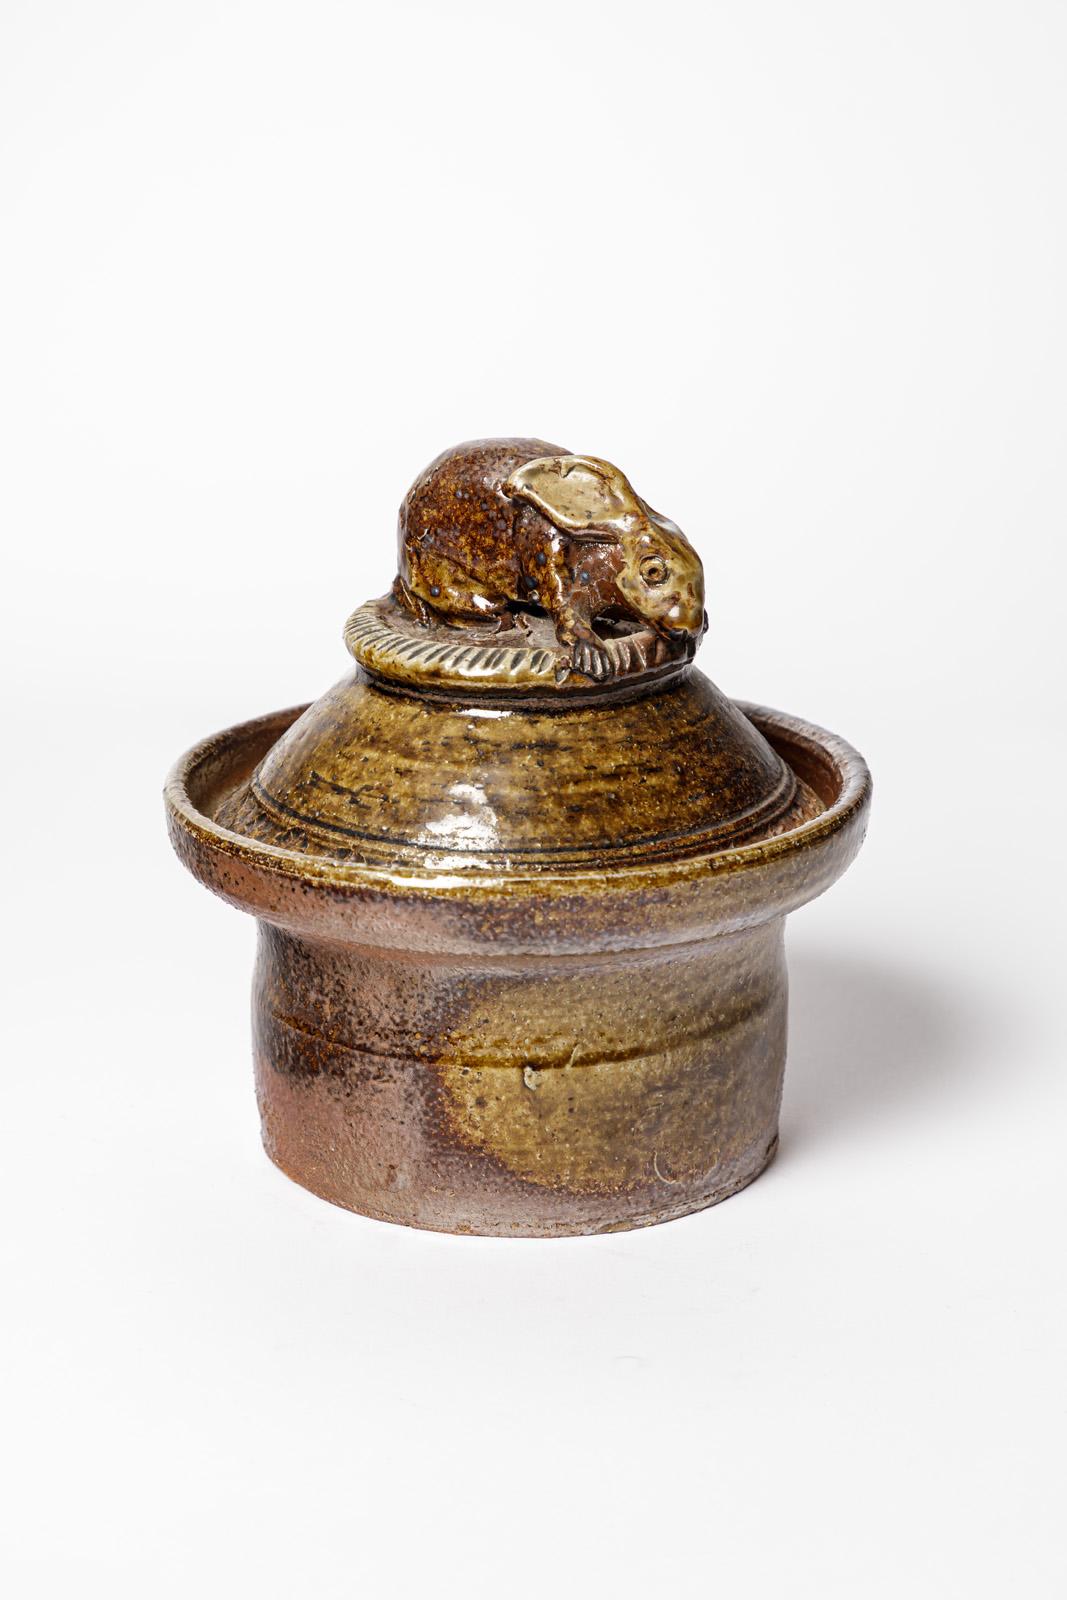 French Large Stoneware Ceramic Animal Rabbit Decorative Box by Claude Gaget La Borne  For Sale